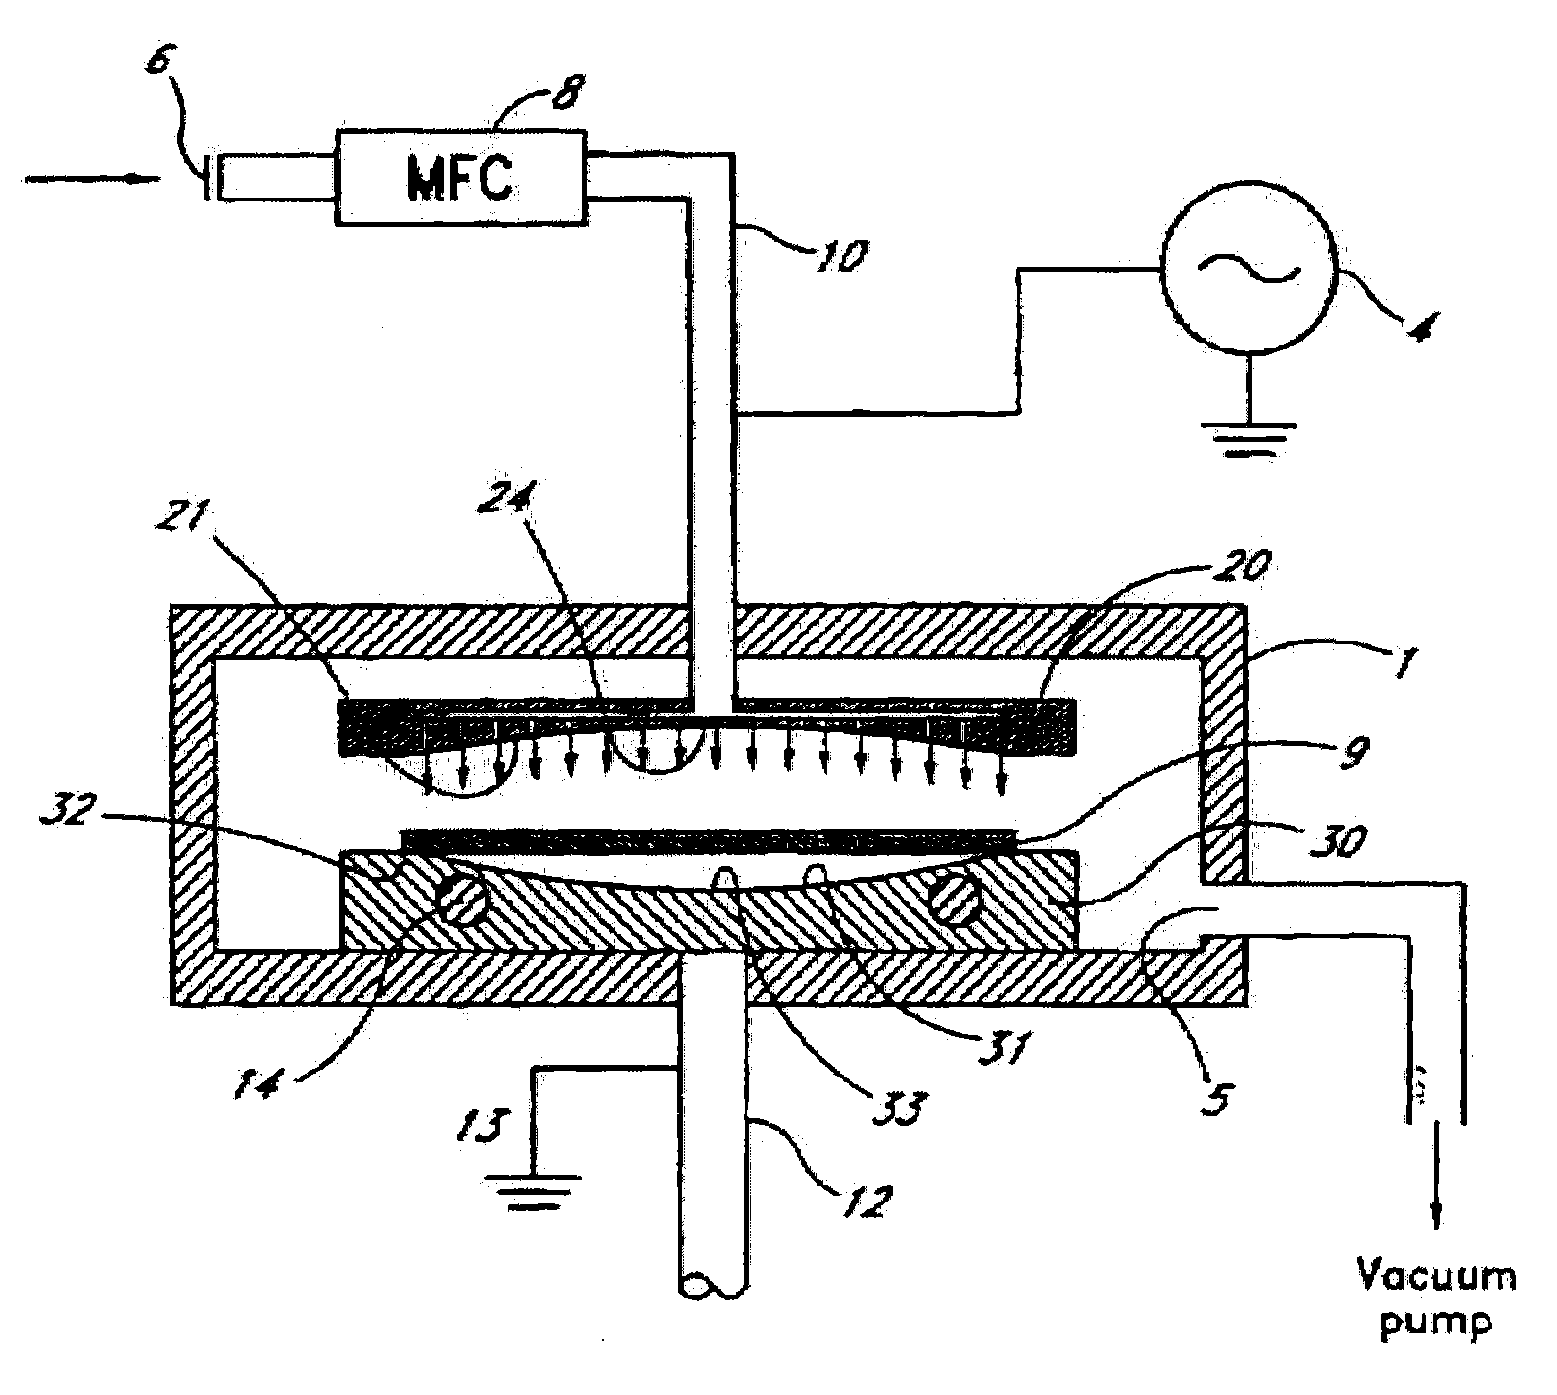 Apparatus for chemical vapor deposition (CVD) with showerhead